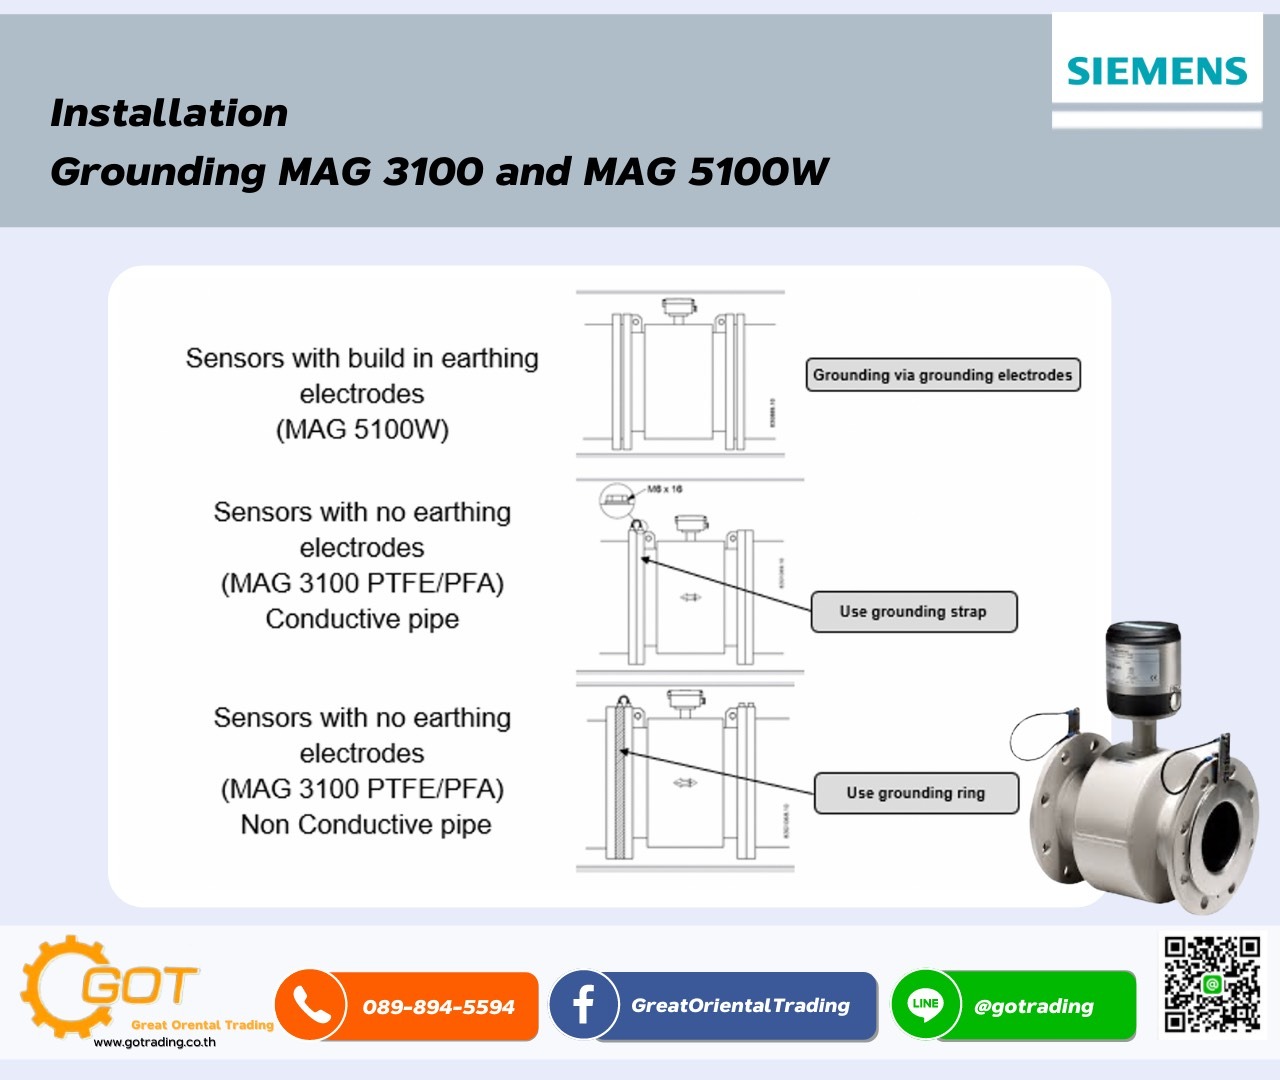 Magnetic Flow รุ่นไหนของ SIEMENS ต้องทำการติดตั้งแผ่นกราวนด์ (Installation Grounding MAG 3100 and MAG 5100W) การติดตั้ง Magnetic Flow ของSiemens ต้องคำนึงถึงรุ่นที่จะเลือกใช้ด้วย เพราะ แต่ละรุ่นจะมีข้อบังคับให้ติดตั้งดังนี้ รุ่น MAG 5100W ไม่ต้องติดตั้งแผ่นกราวนด์ 